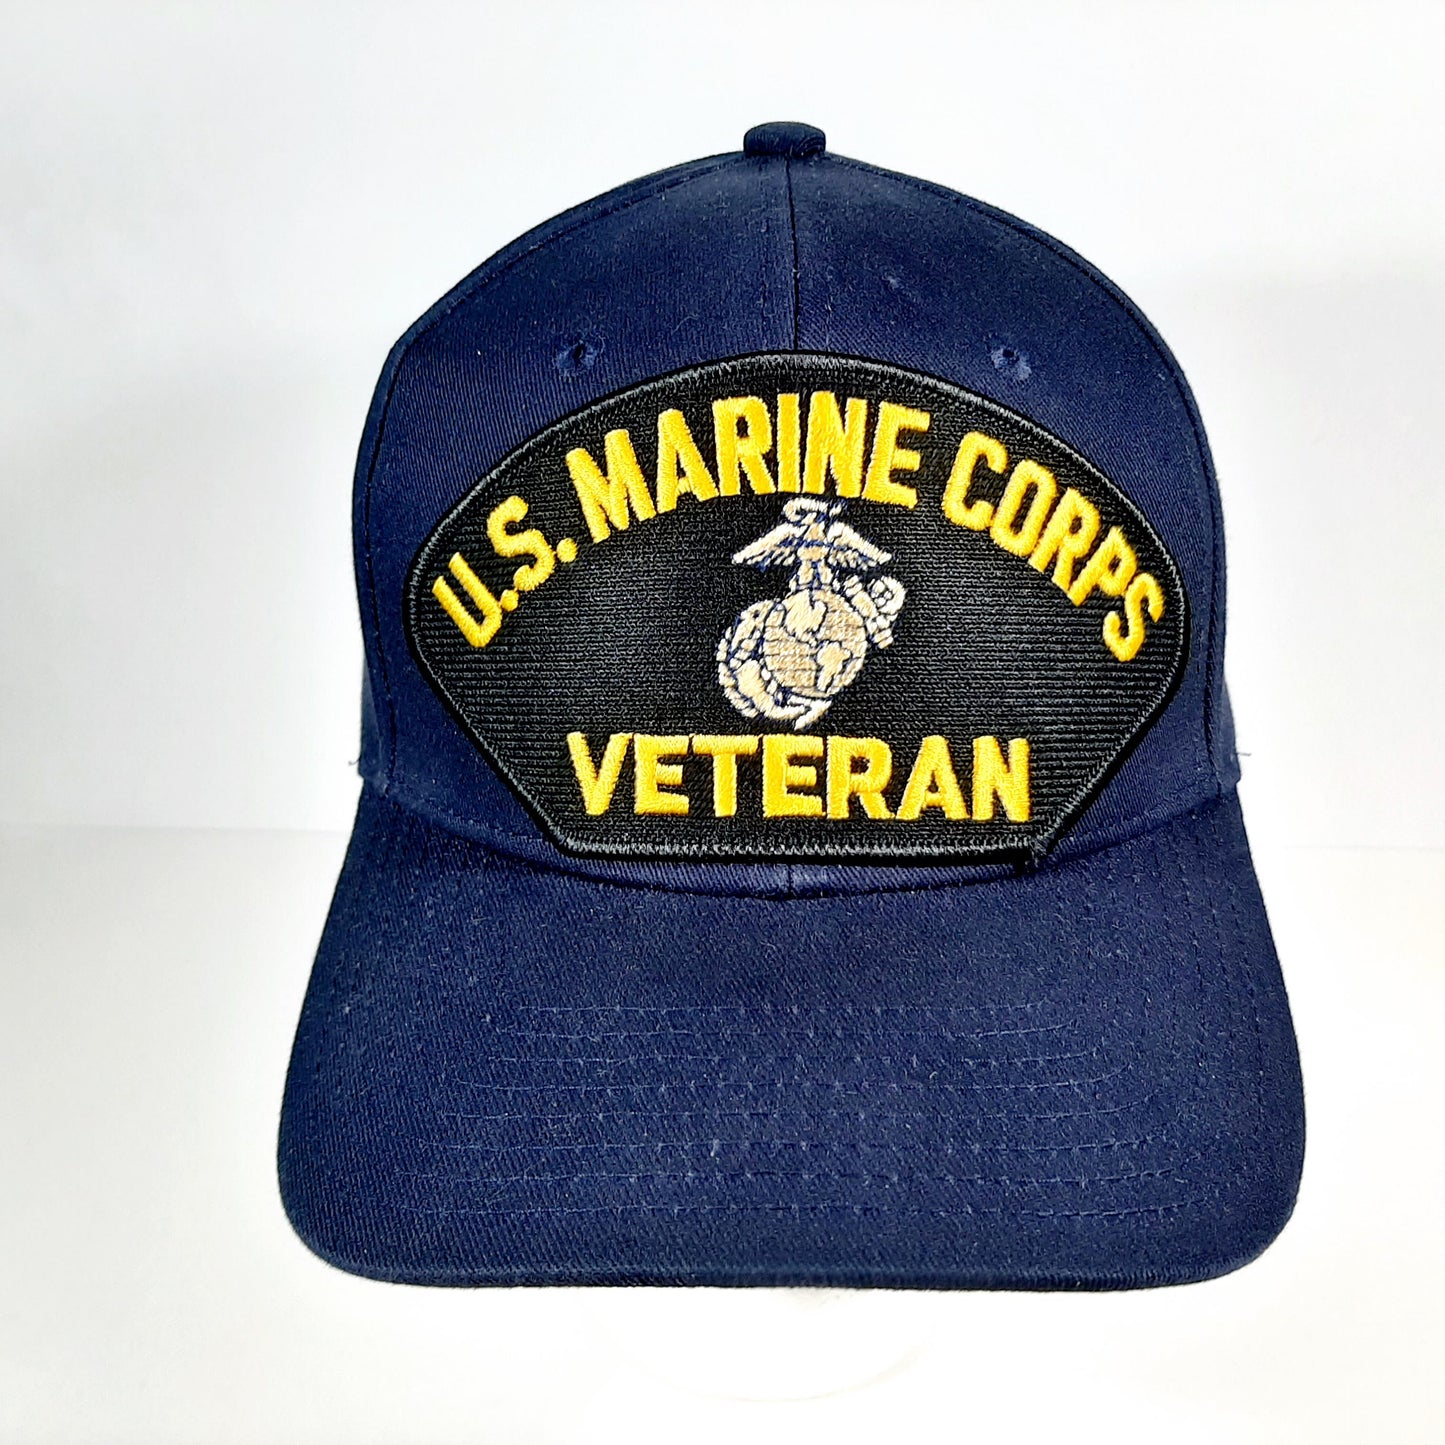 U.S. Marine Corps Veteran Embroidered Patch Hat Baseball Cap Adjustable Blue